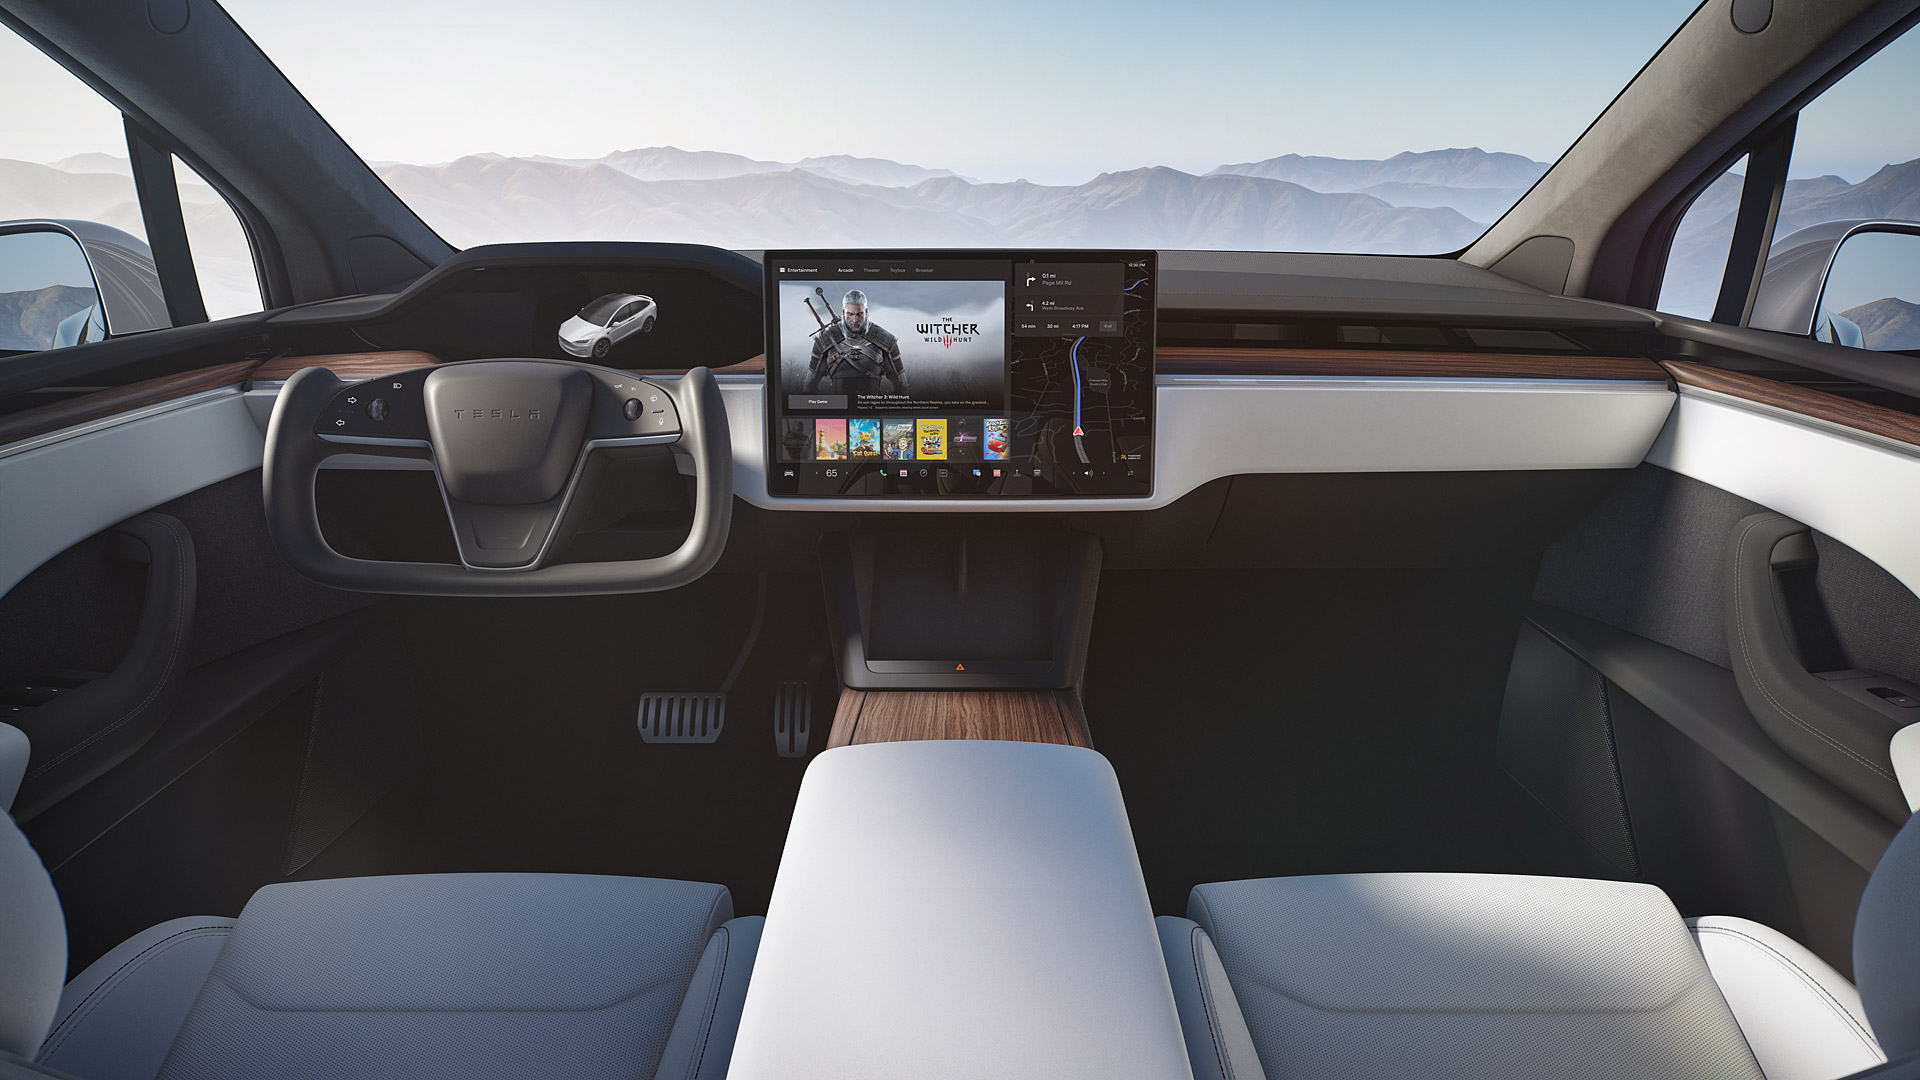  2022 Tesla Model X Plaid Wallpaper.